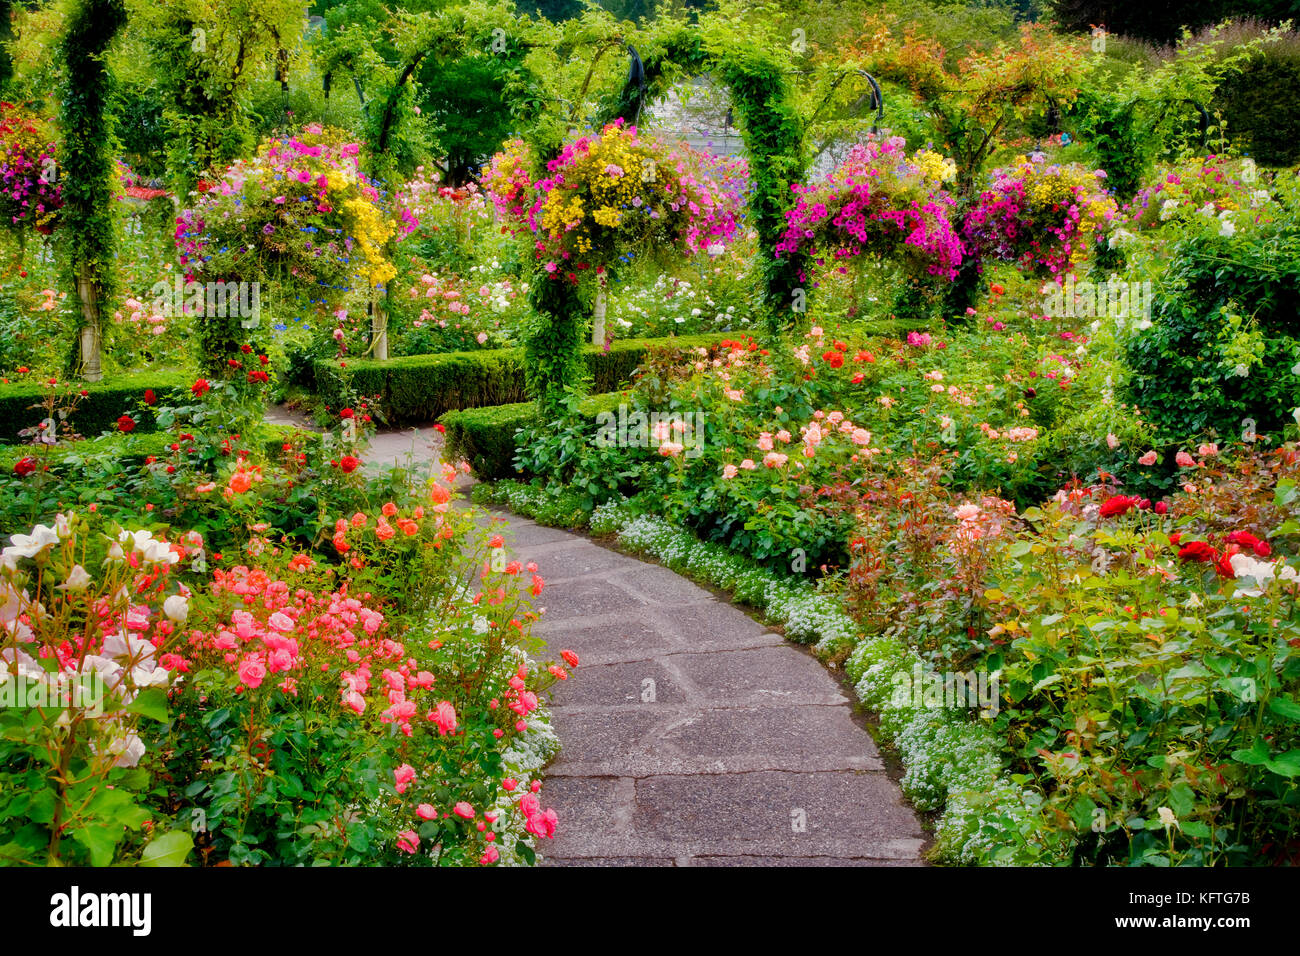 Pathway with flowers. Butchart Gardens, B.C. Canada Stock Photo - Alamy